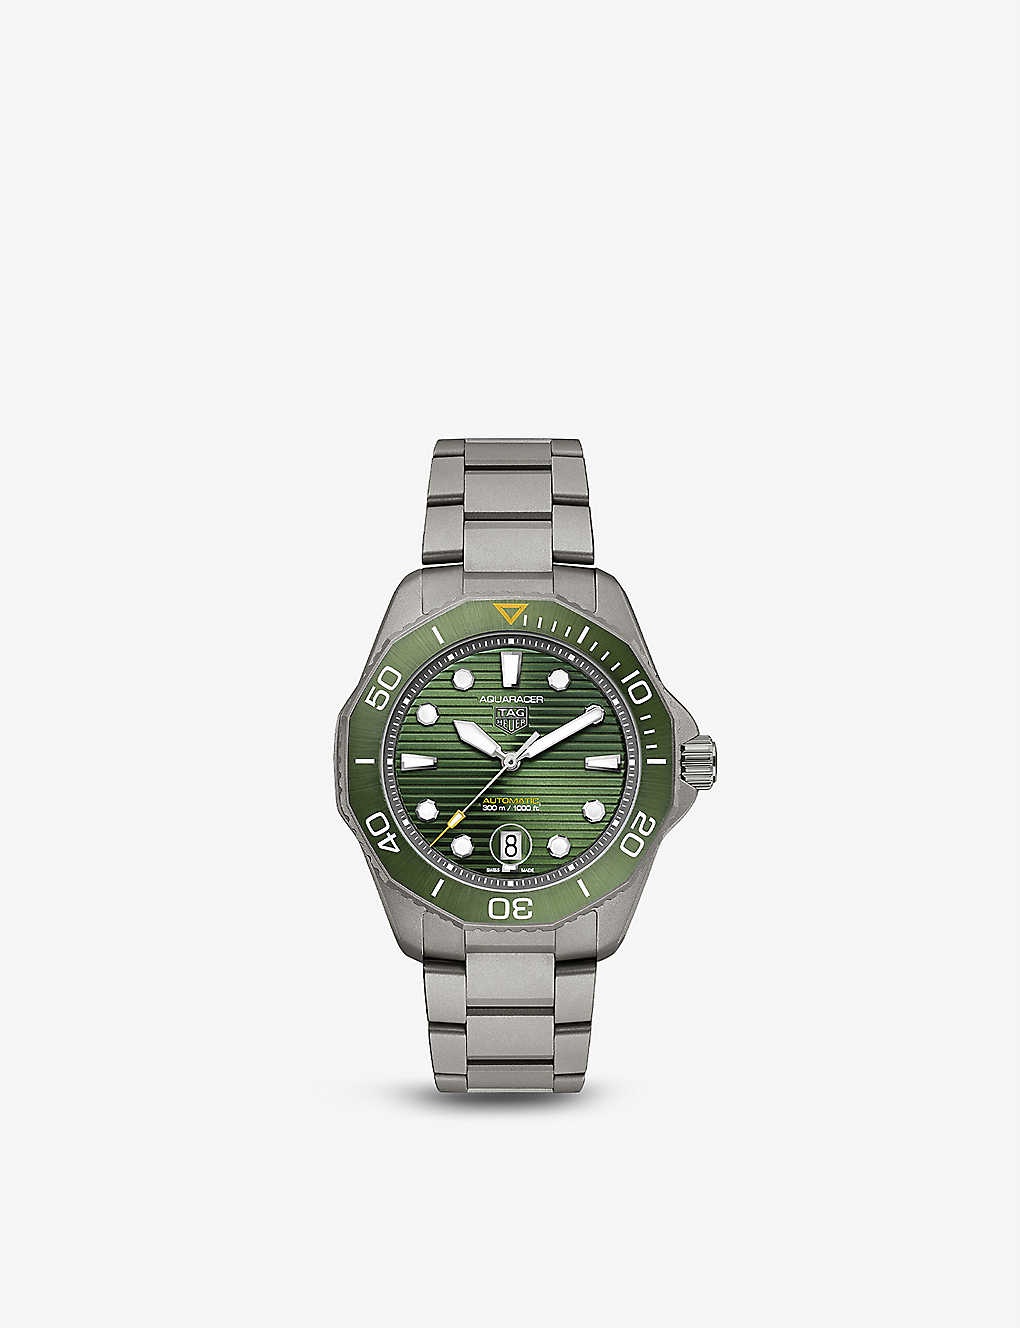 WBP208B.BF0631 Aquaracer titanium automatic watch - 1